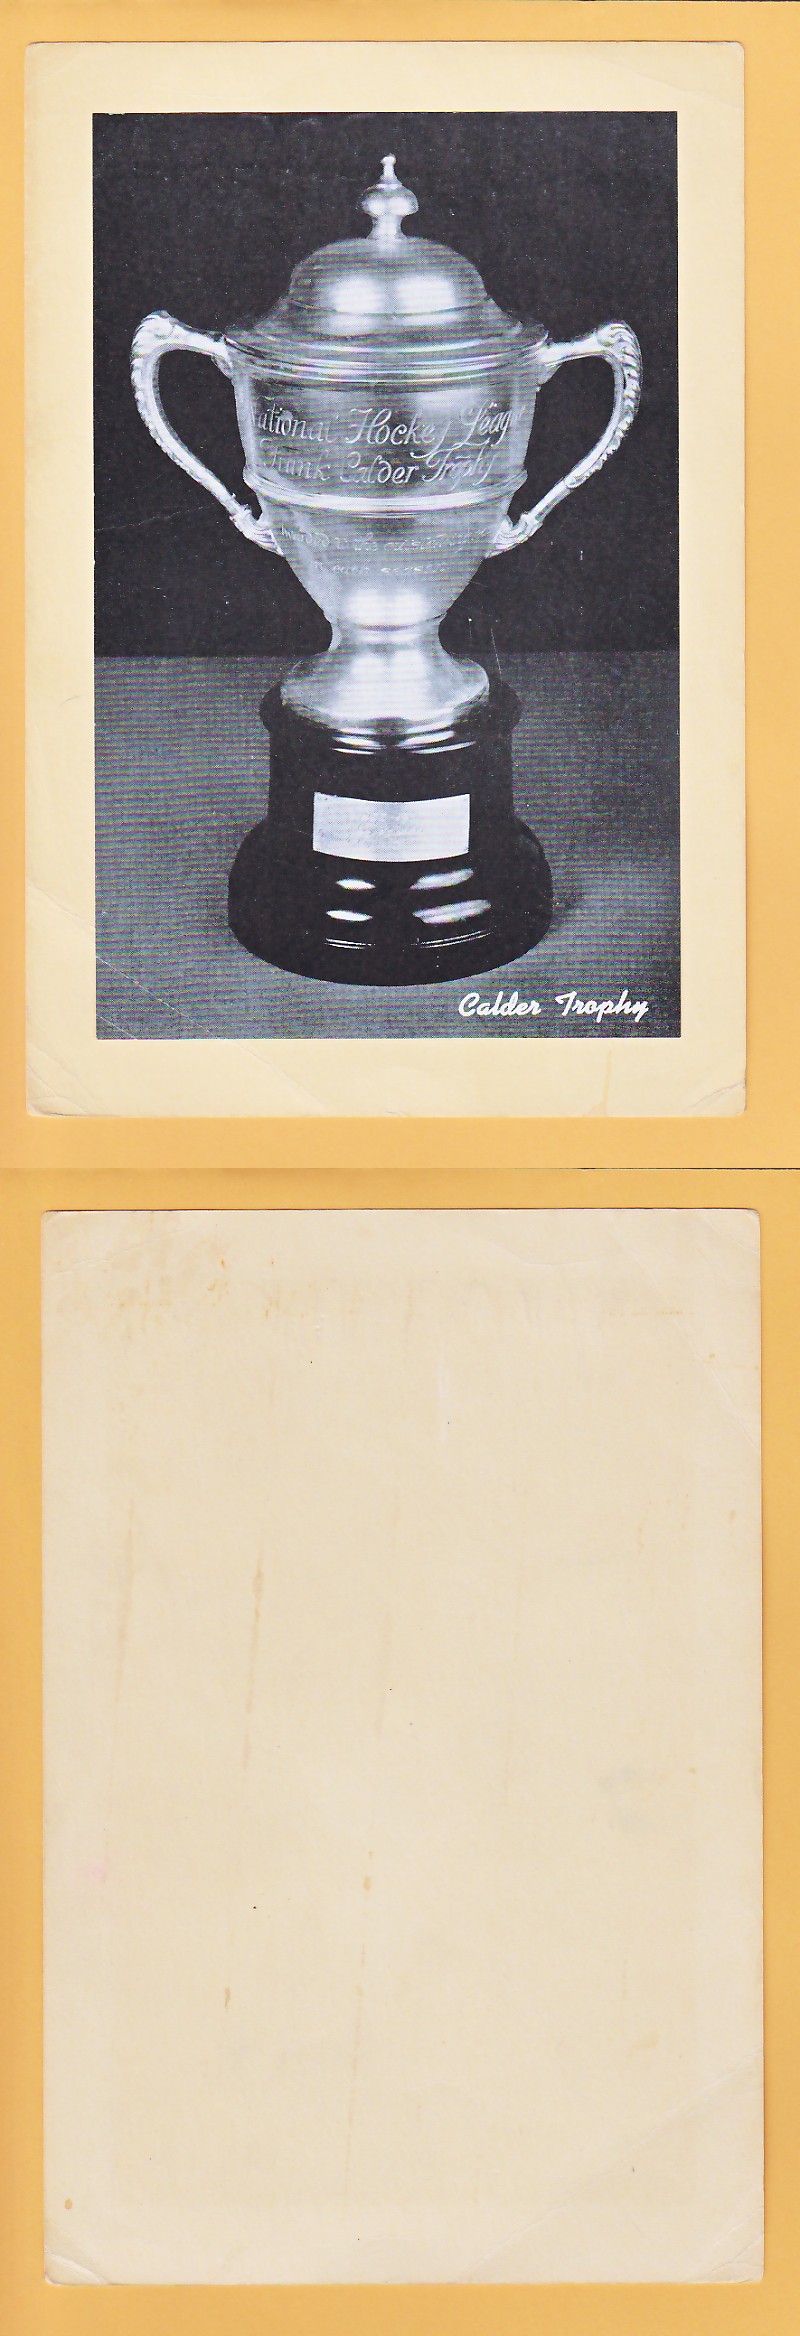 1934-43 BEEHIVE PHOTO GR.1 CALDER TROPHY BLANK BACK photo